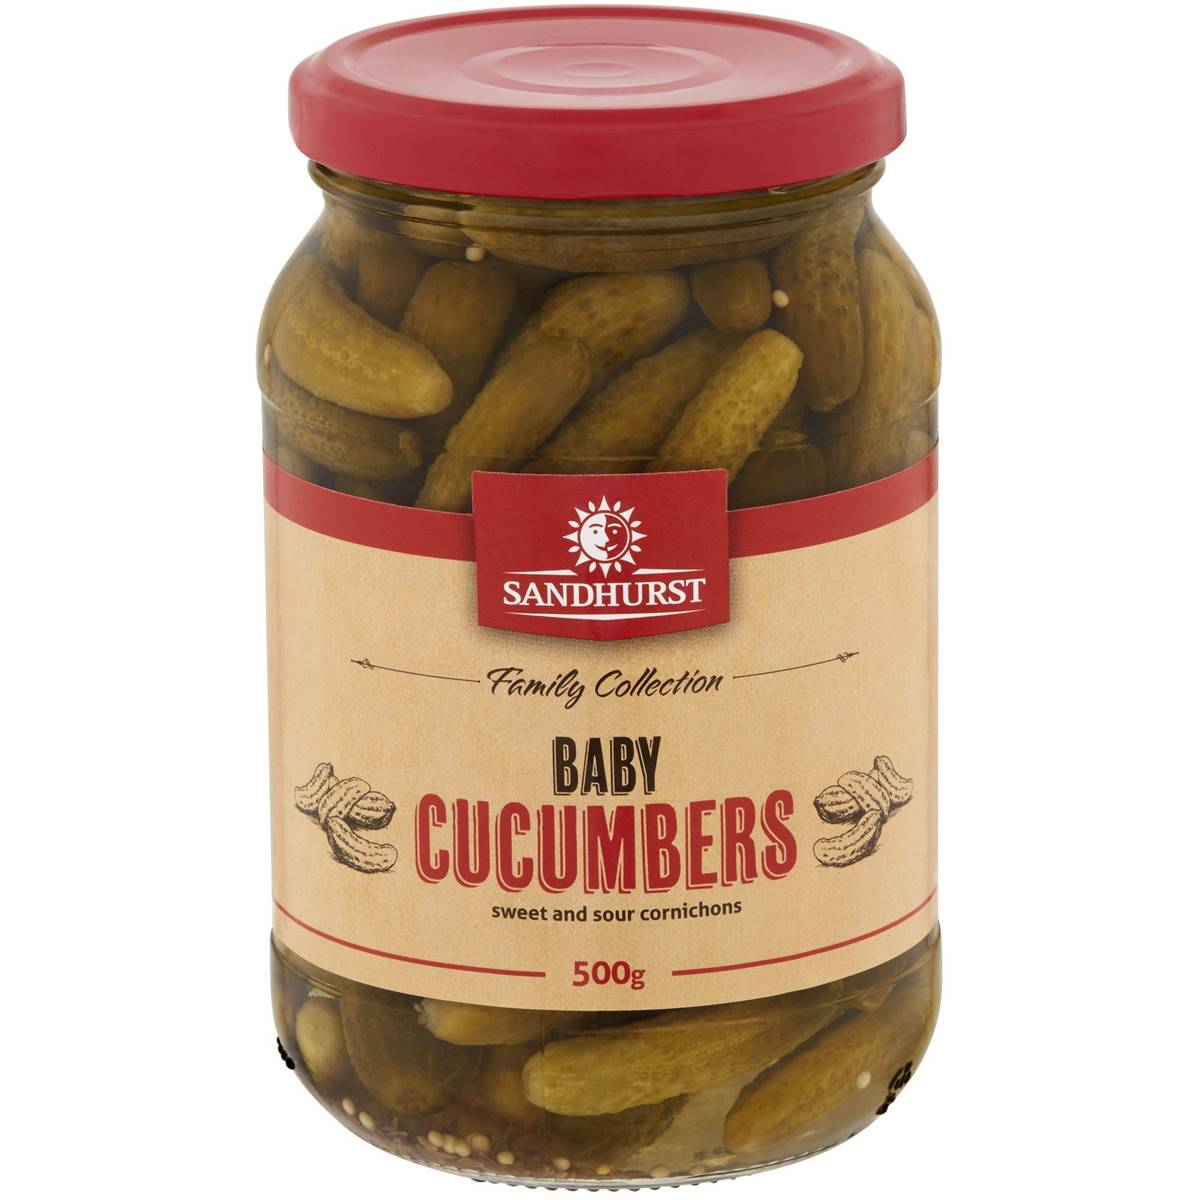 Calories in Sandhurst Baby Cucumbers